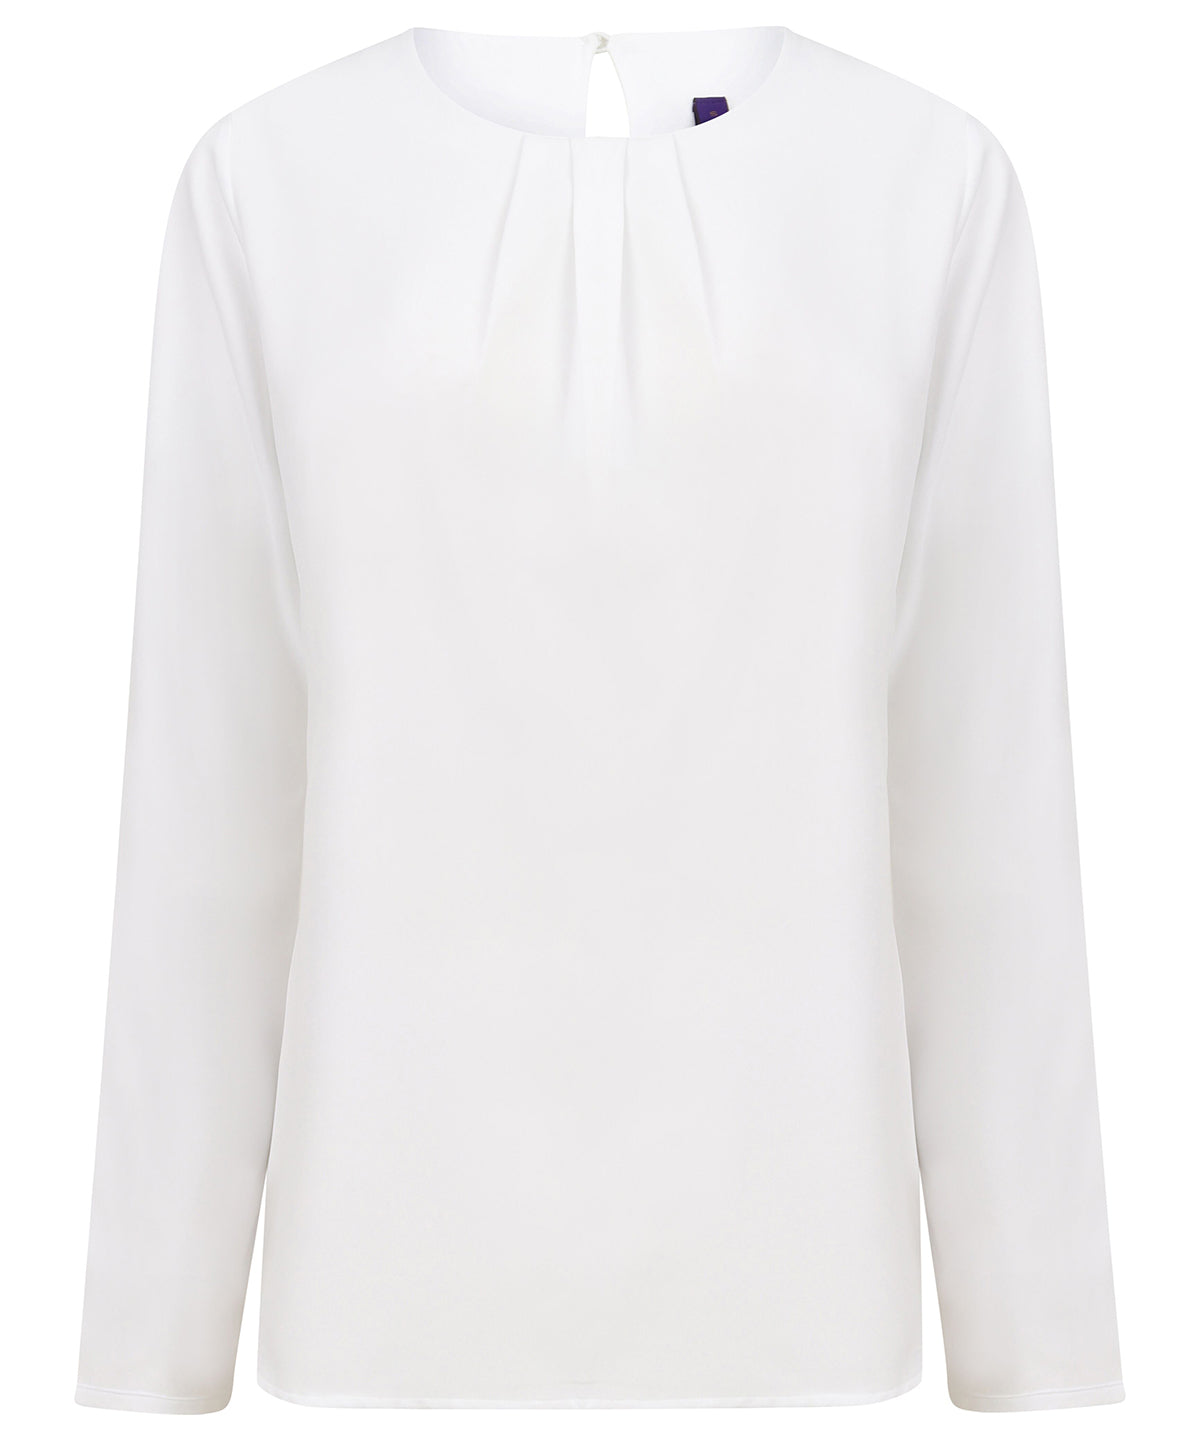 Personalised Blouses - Black Henbury Women's pleat front long sleeve blouse